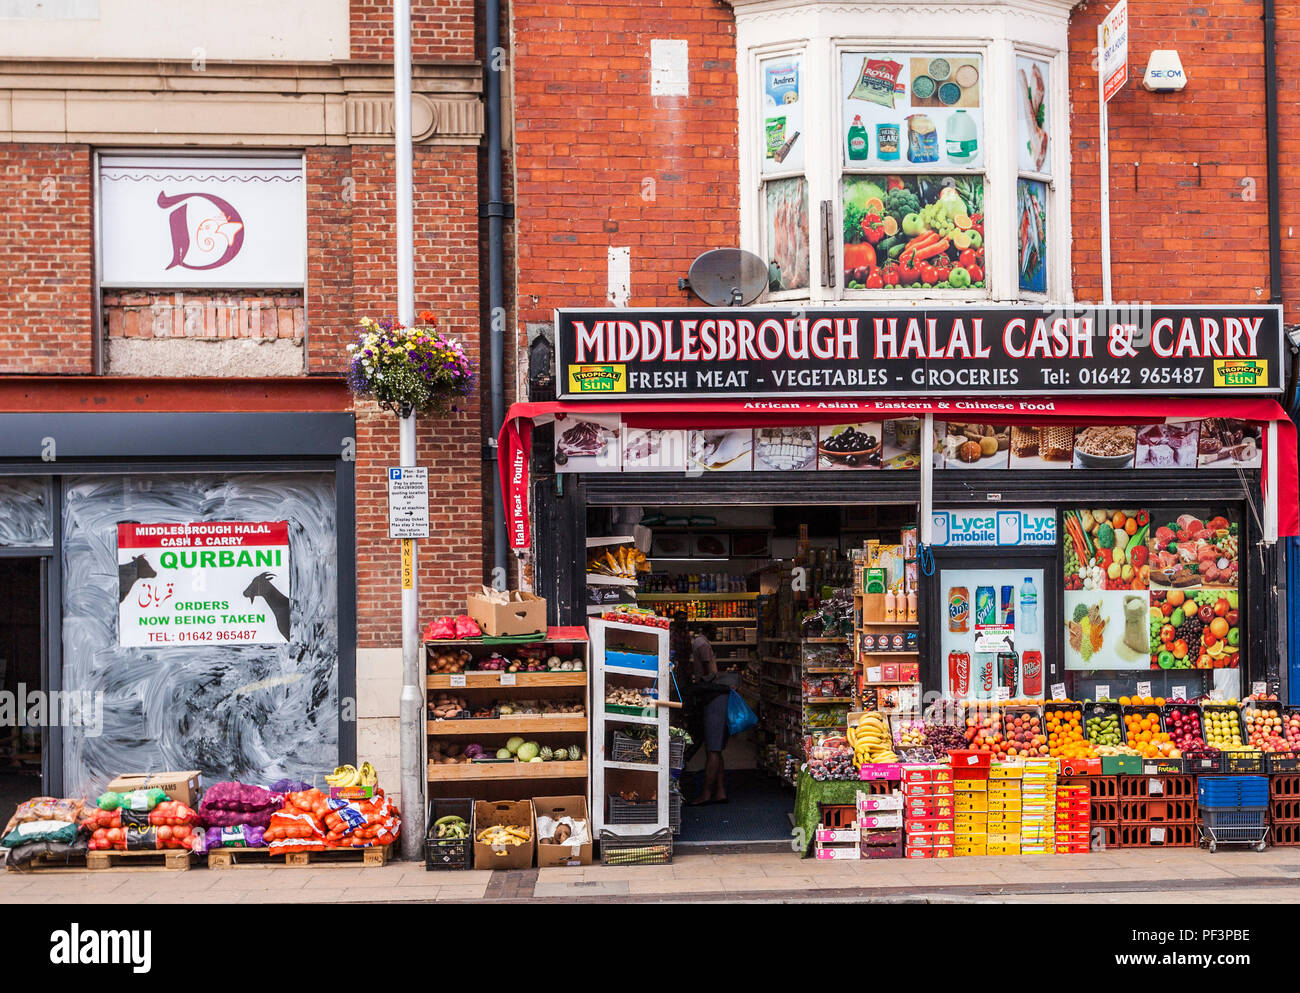 Middlesbrough Halal Cash and Carry,Linthorpe Road,Middlesbrough,l'Inghilterra,UK Foto Stock